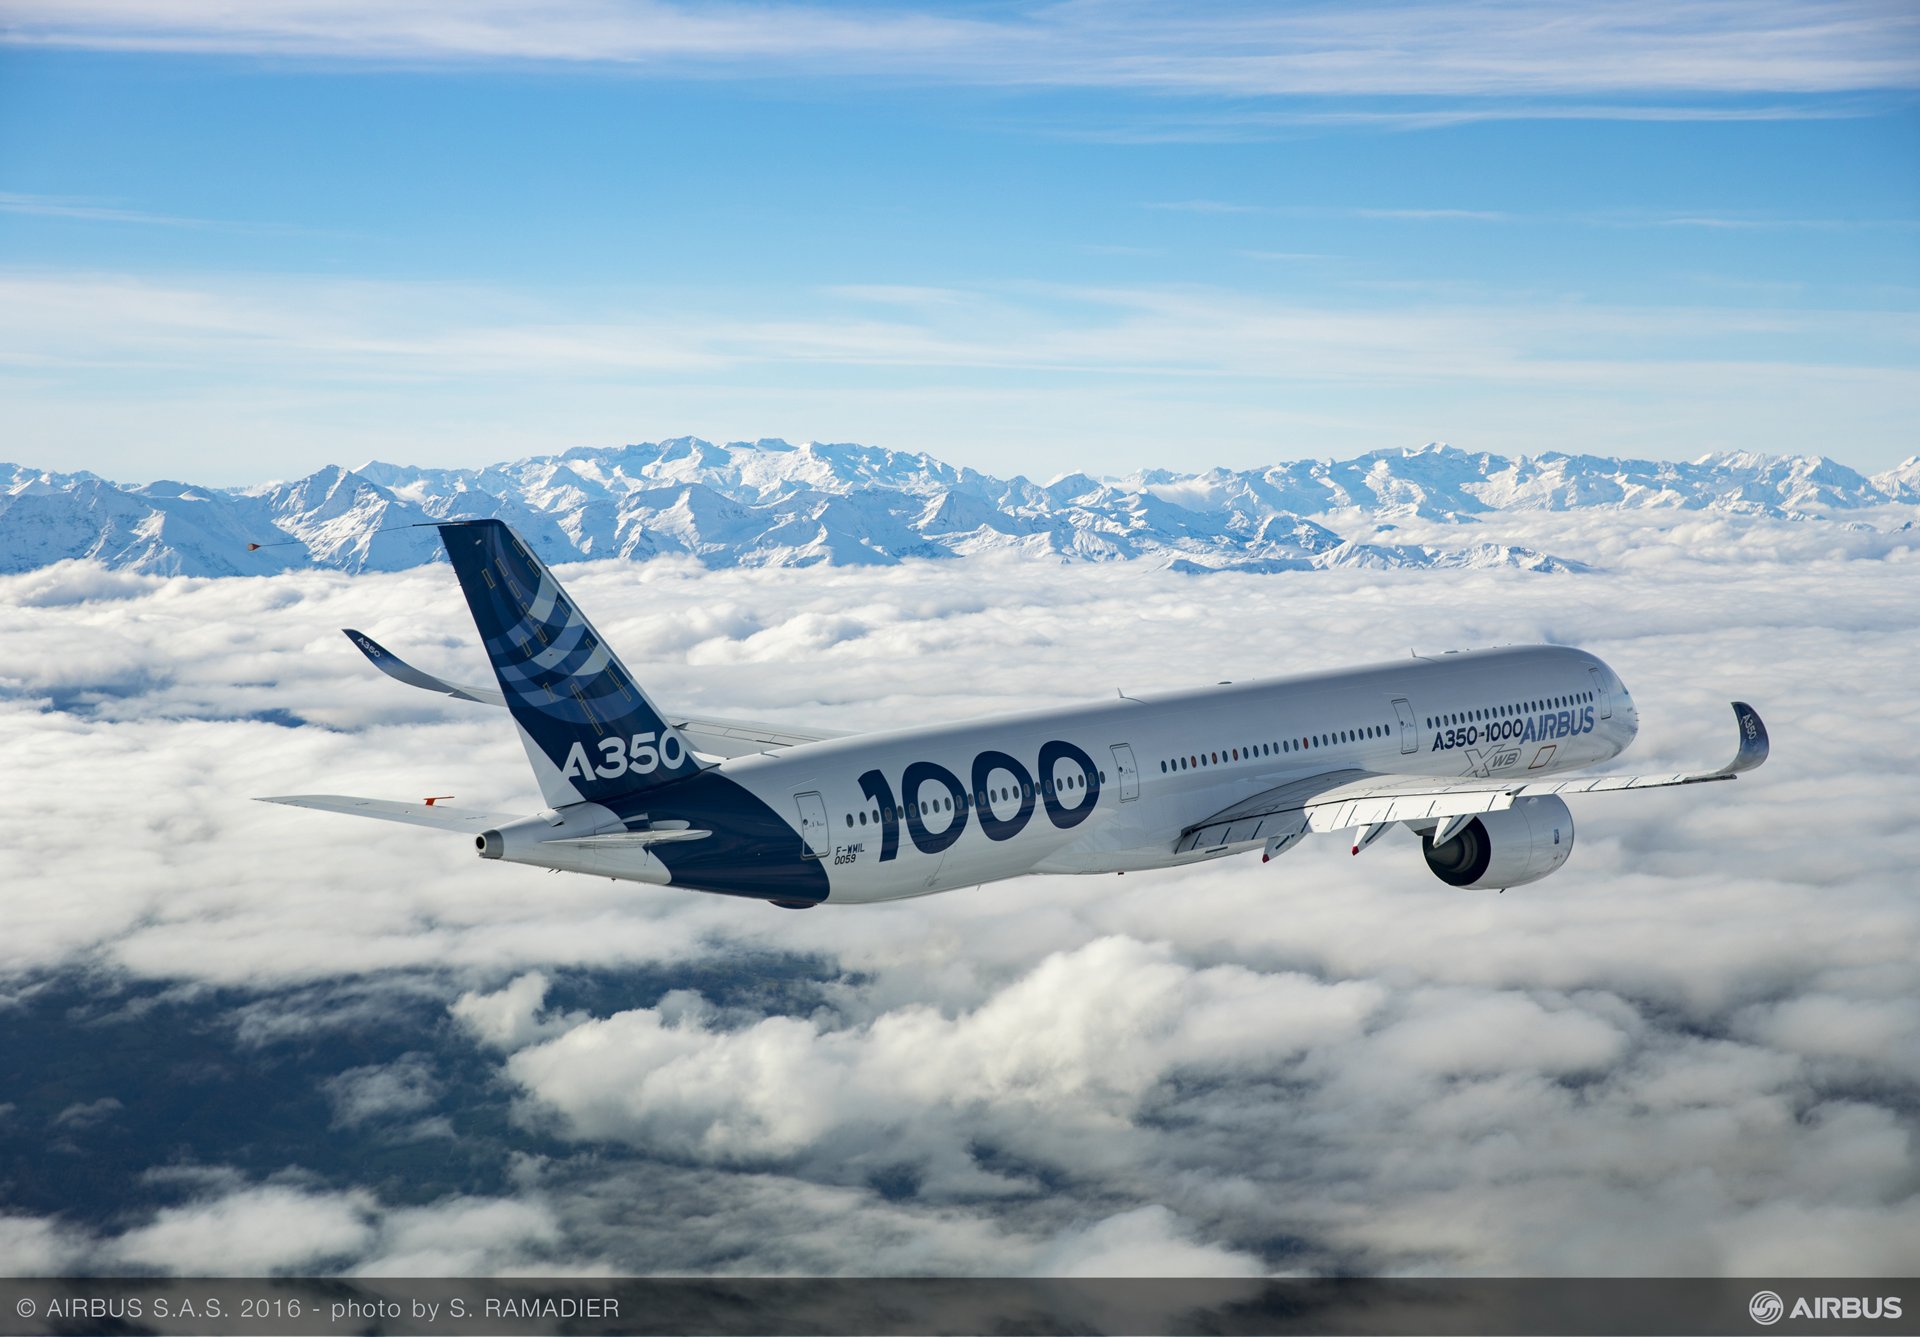 A350 Xwb Family Passenger Aircraft Airbus Images, Photos, Reviews